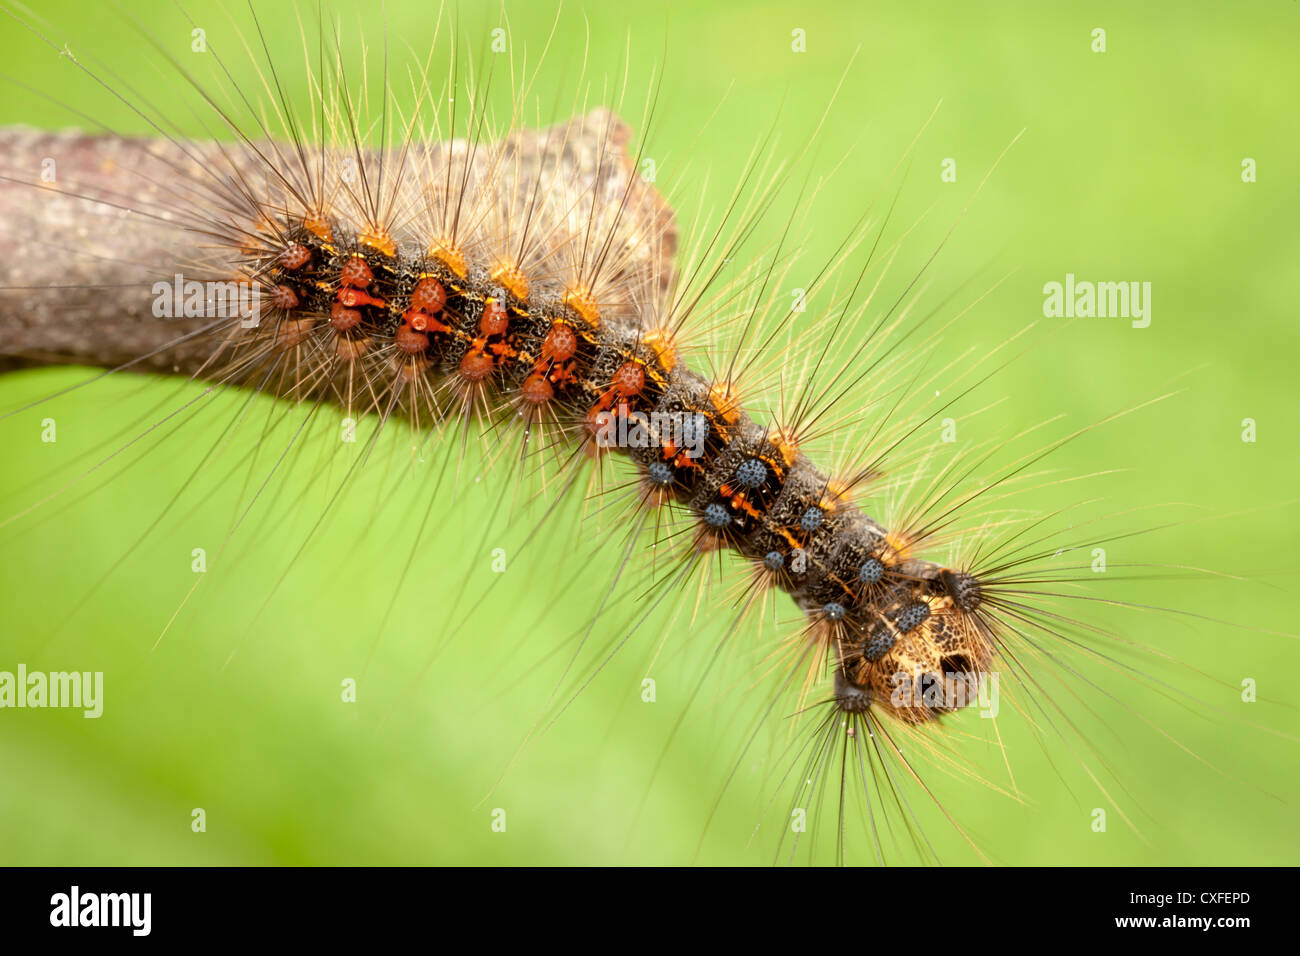 Gypsy Moth Caterpillar Stock Photos & Gypsy Moth Caterpillar Stock Images - Alamy